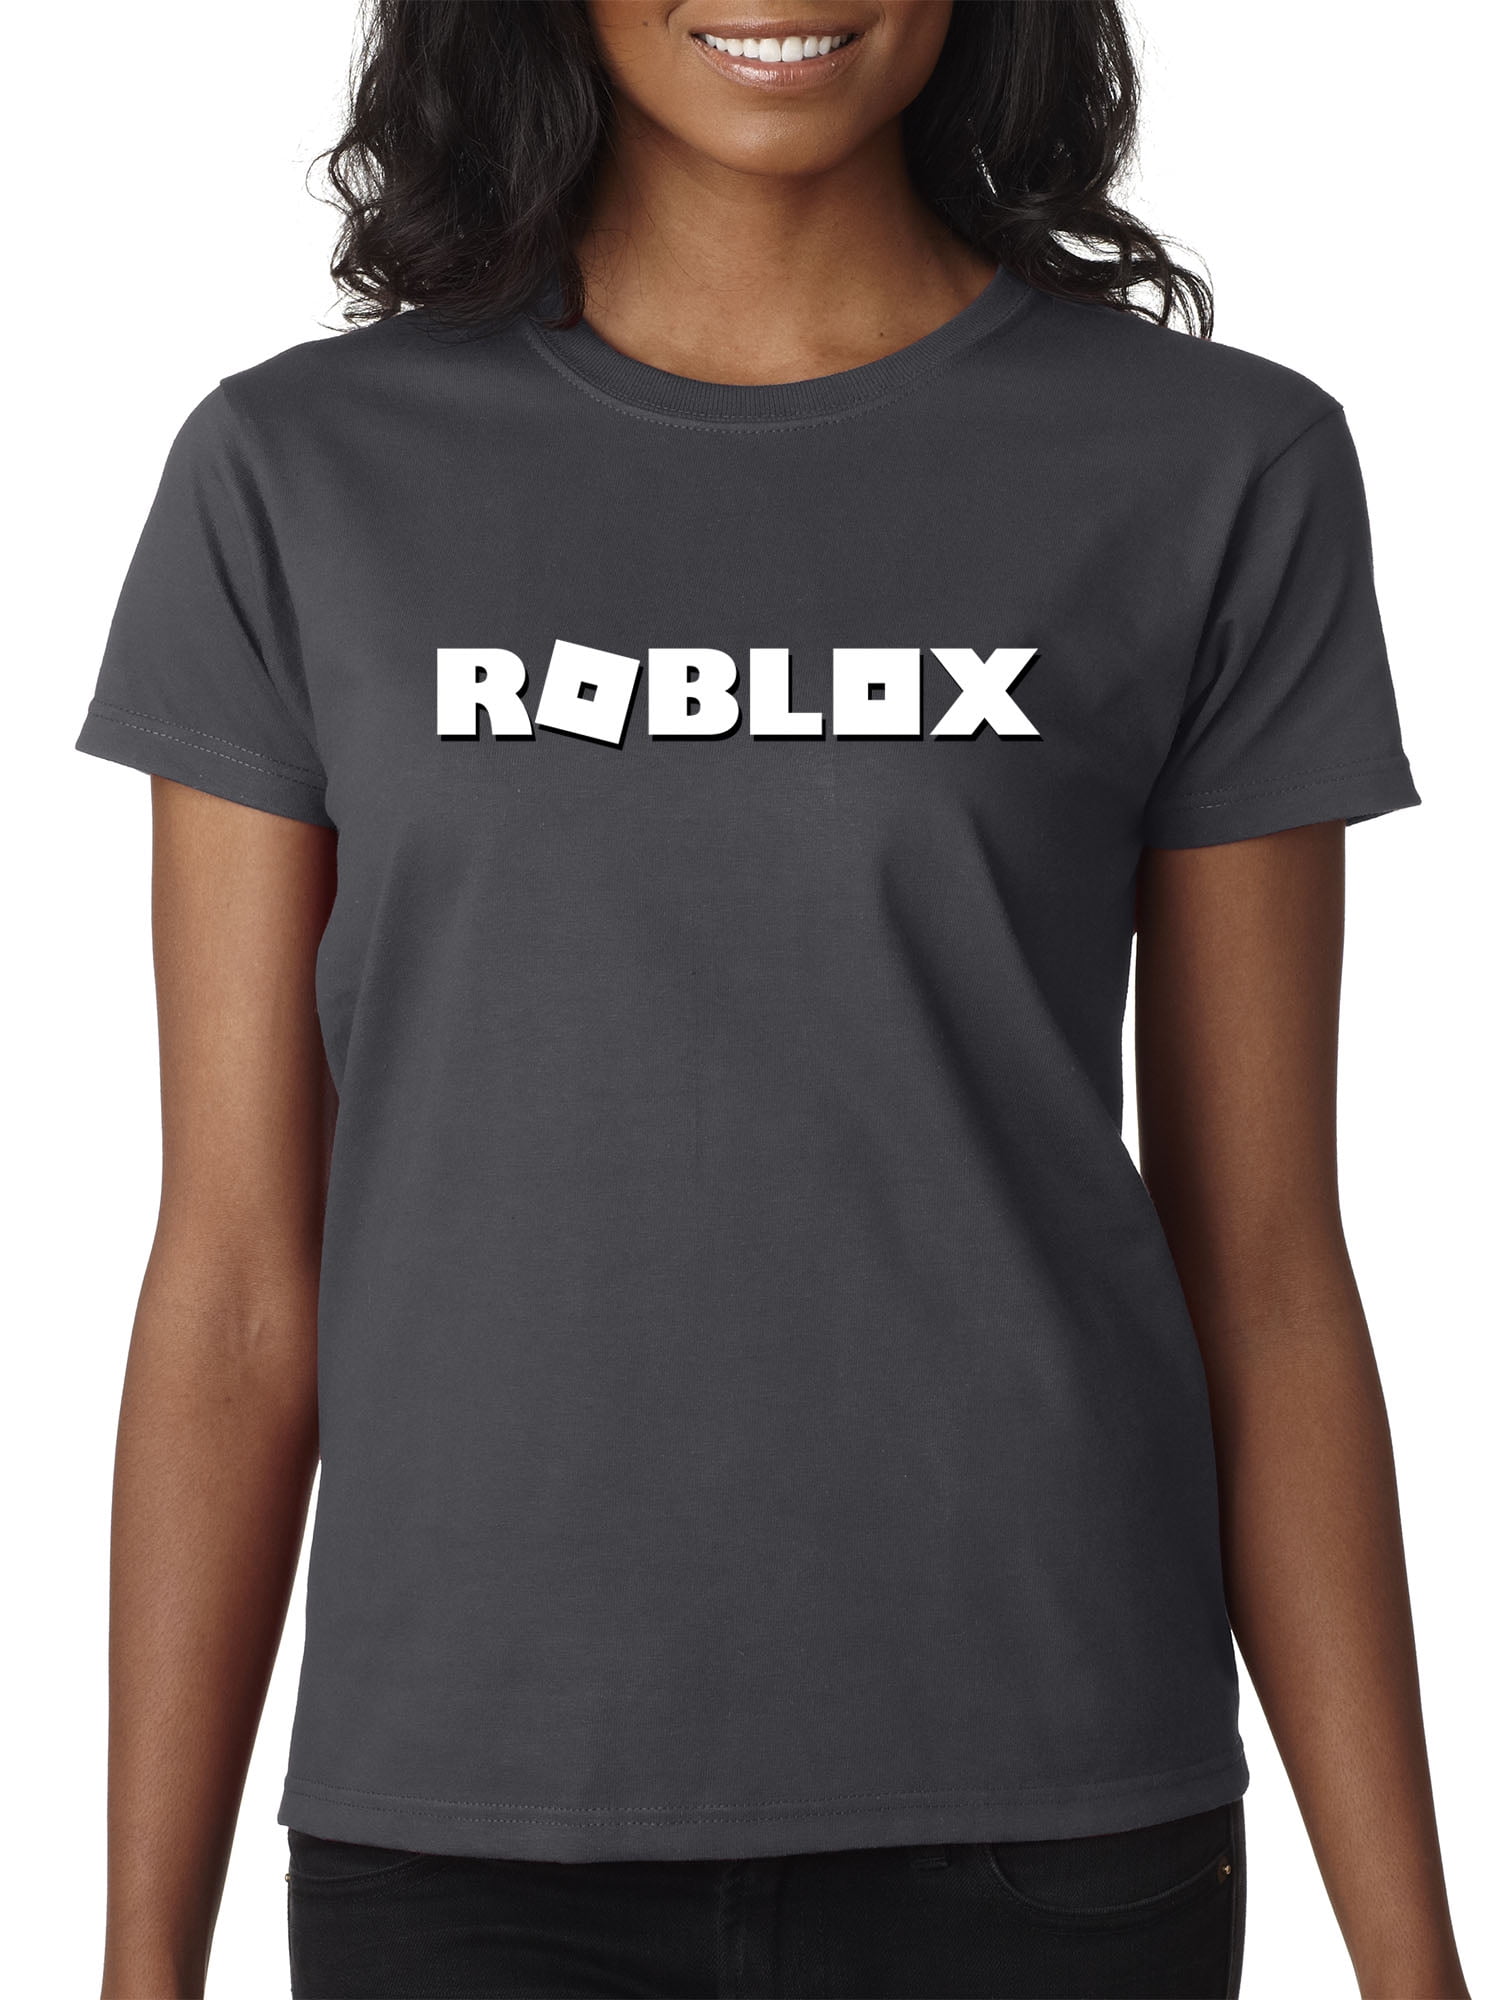 New Way New Way 923 Women S T Shirt Roblox Logo Game Accent 2xl Charcoal Walmart Com Walmart Com